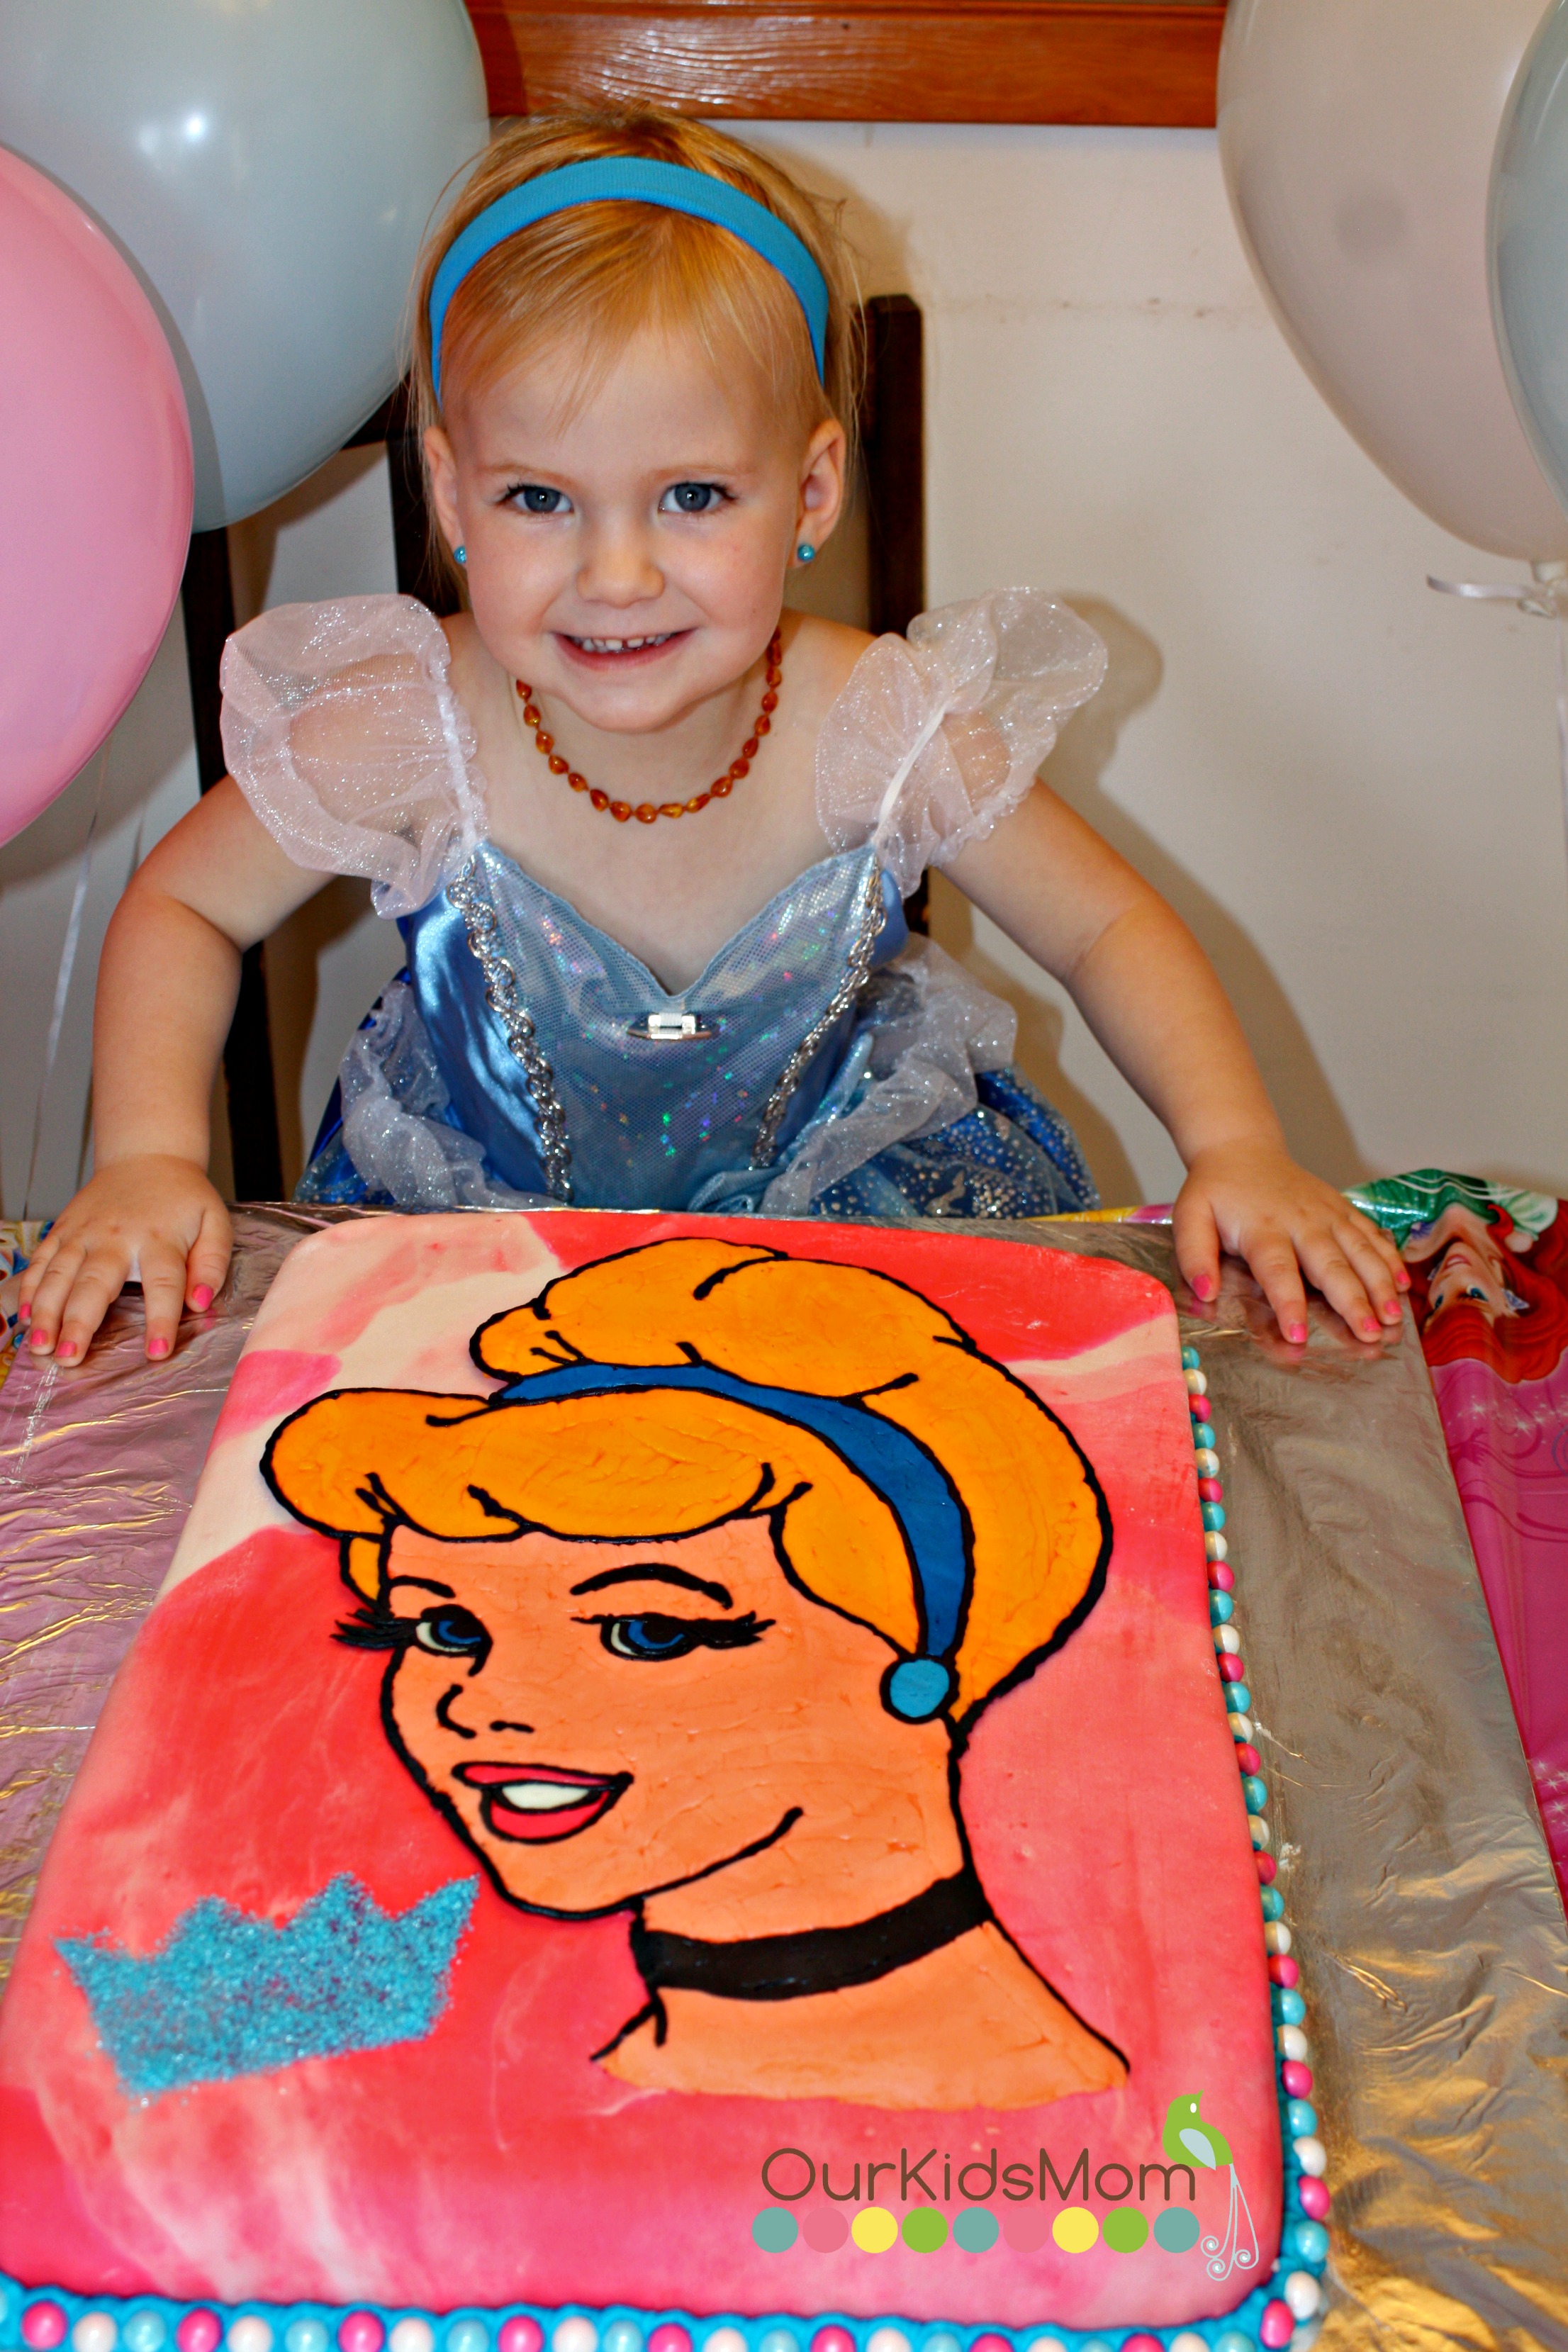 Princess Decorative Baking in Princess Party Supplies - Walmart.com